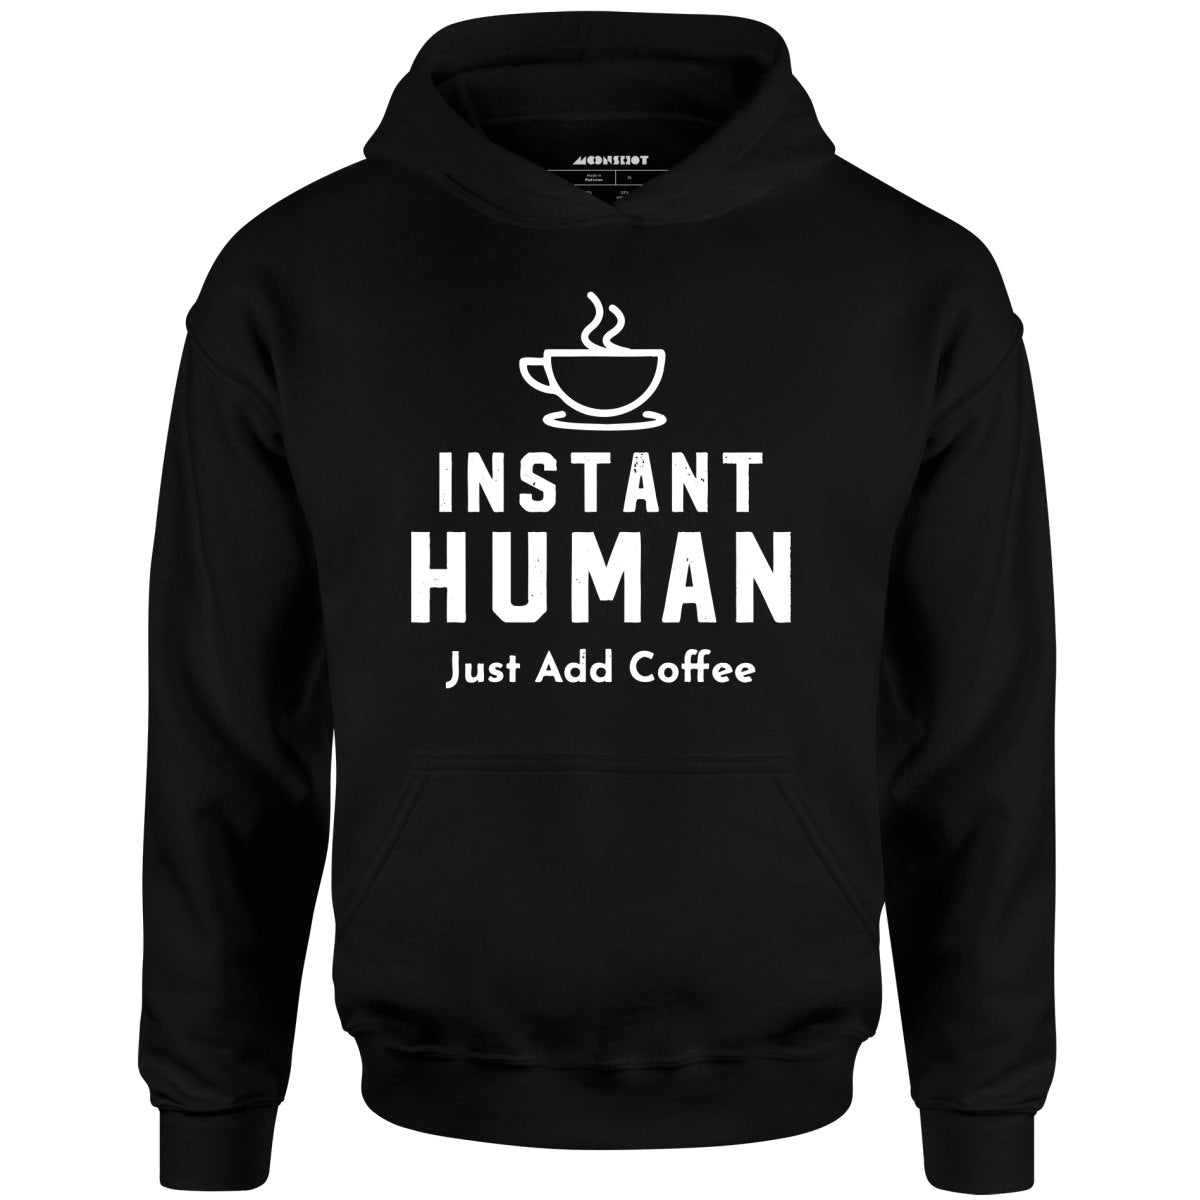 Instant Human Just Add Coffee - Unisex Hoodie